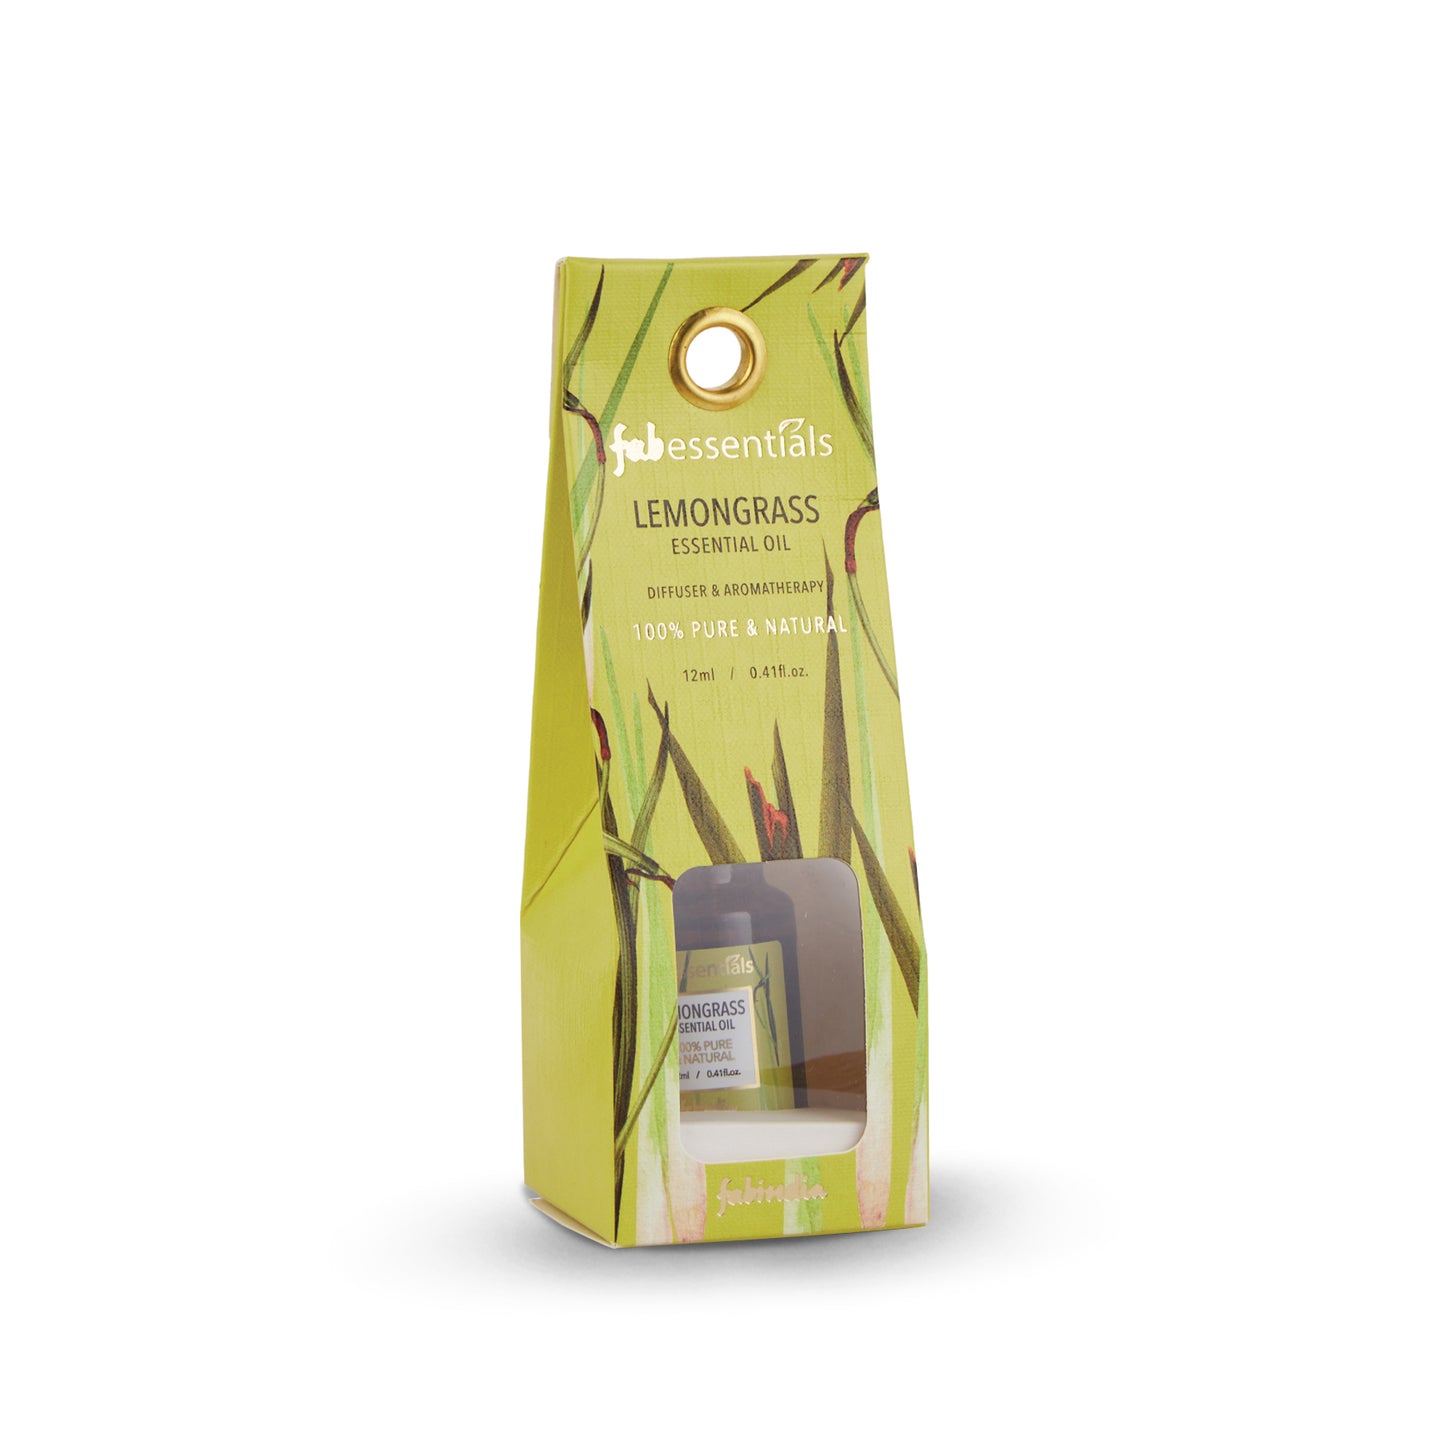 Fabessentials Lemongrass Essential Oil, 12ml